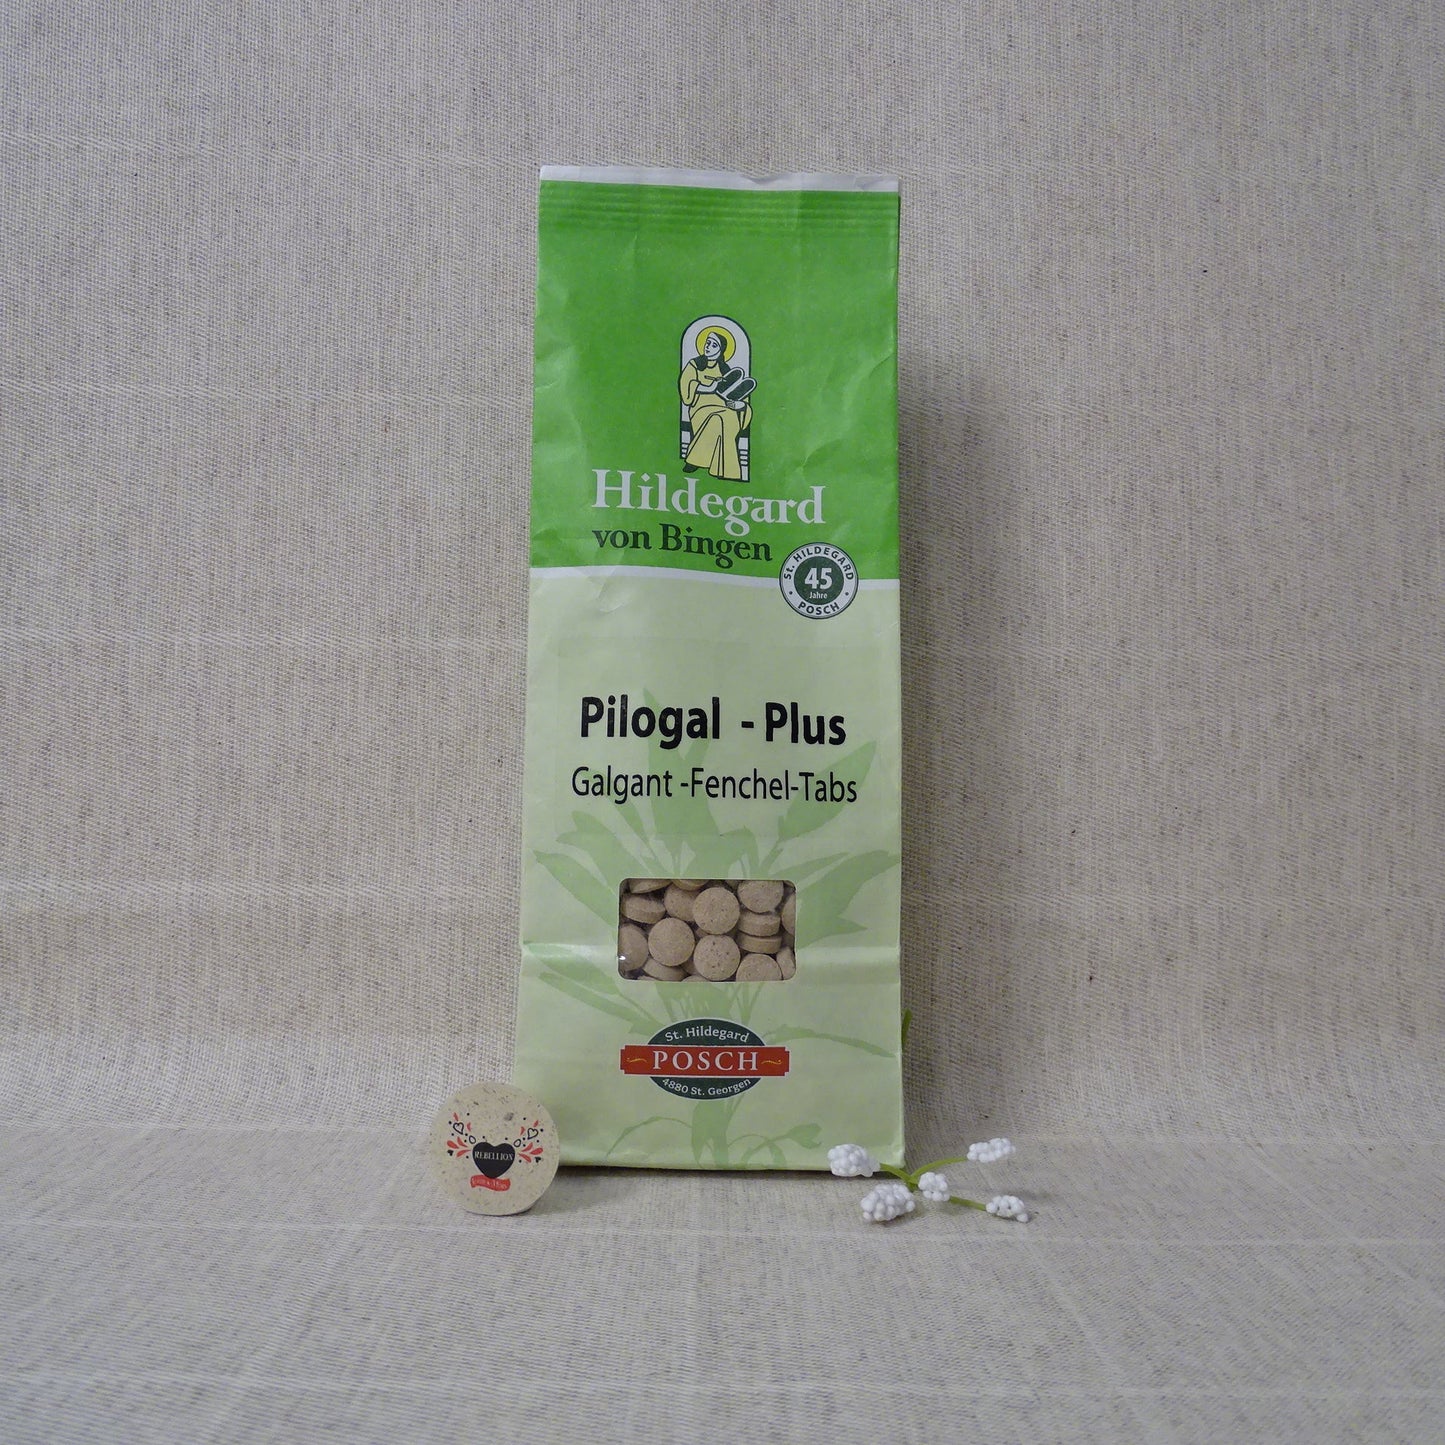 Pilogal Plus® Galgant-Fenchel-Tabs St.Hildegard Posch 150g Beutel